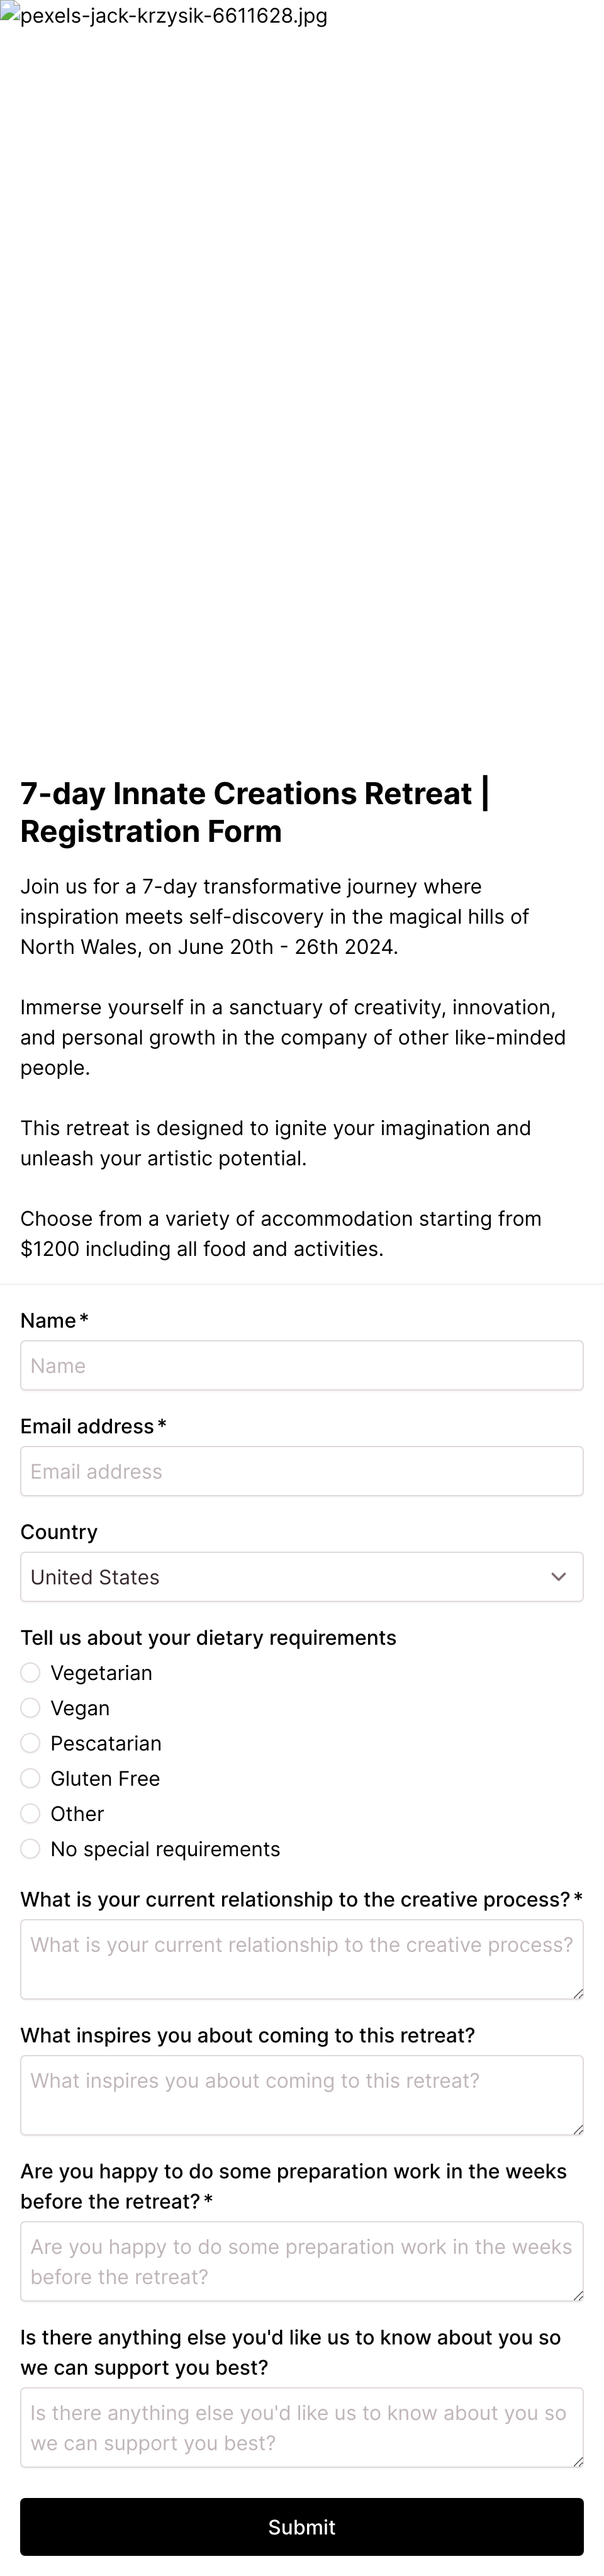 Creative retreat registration form